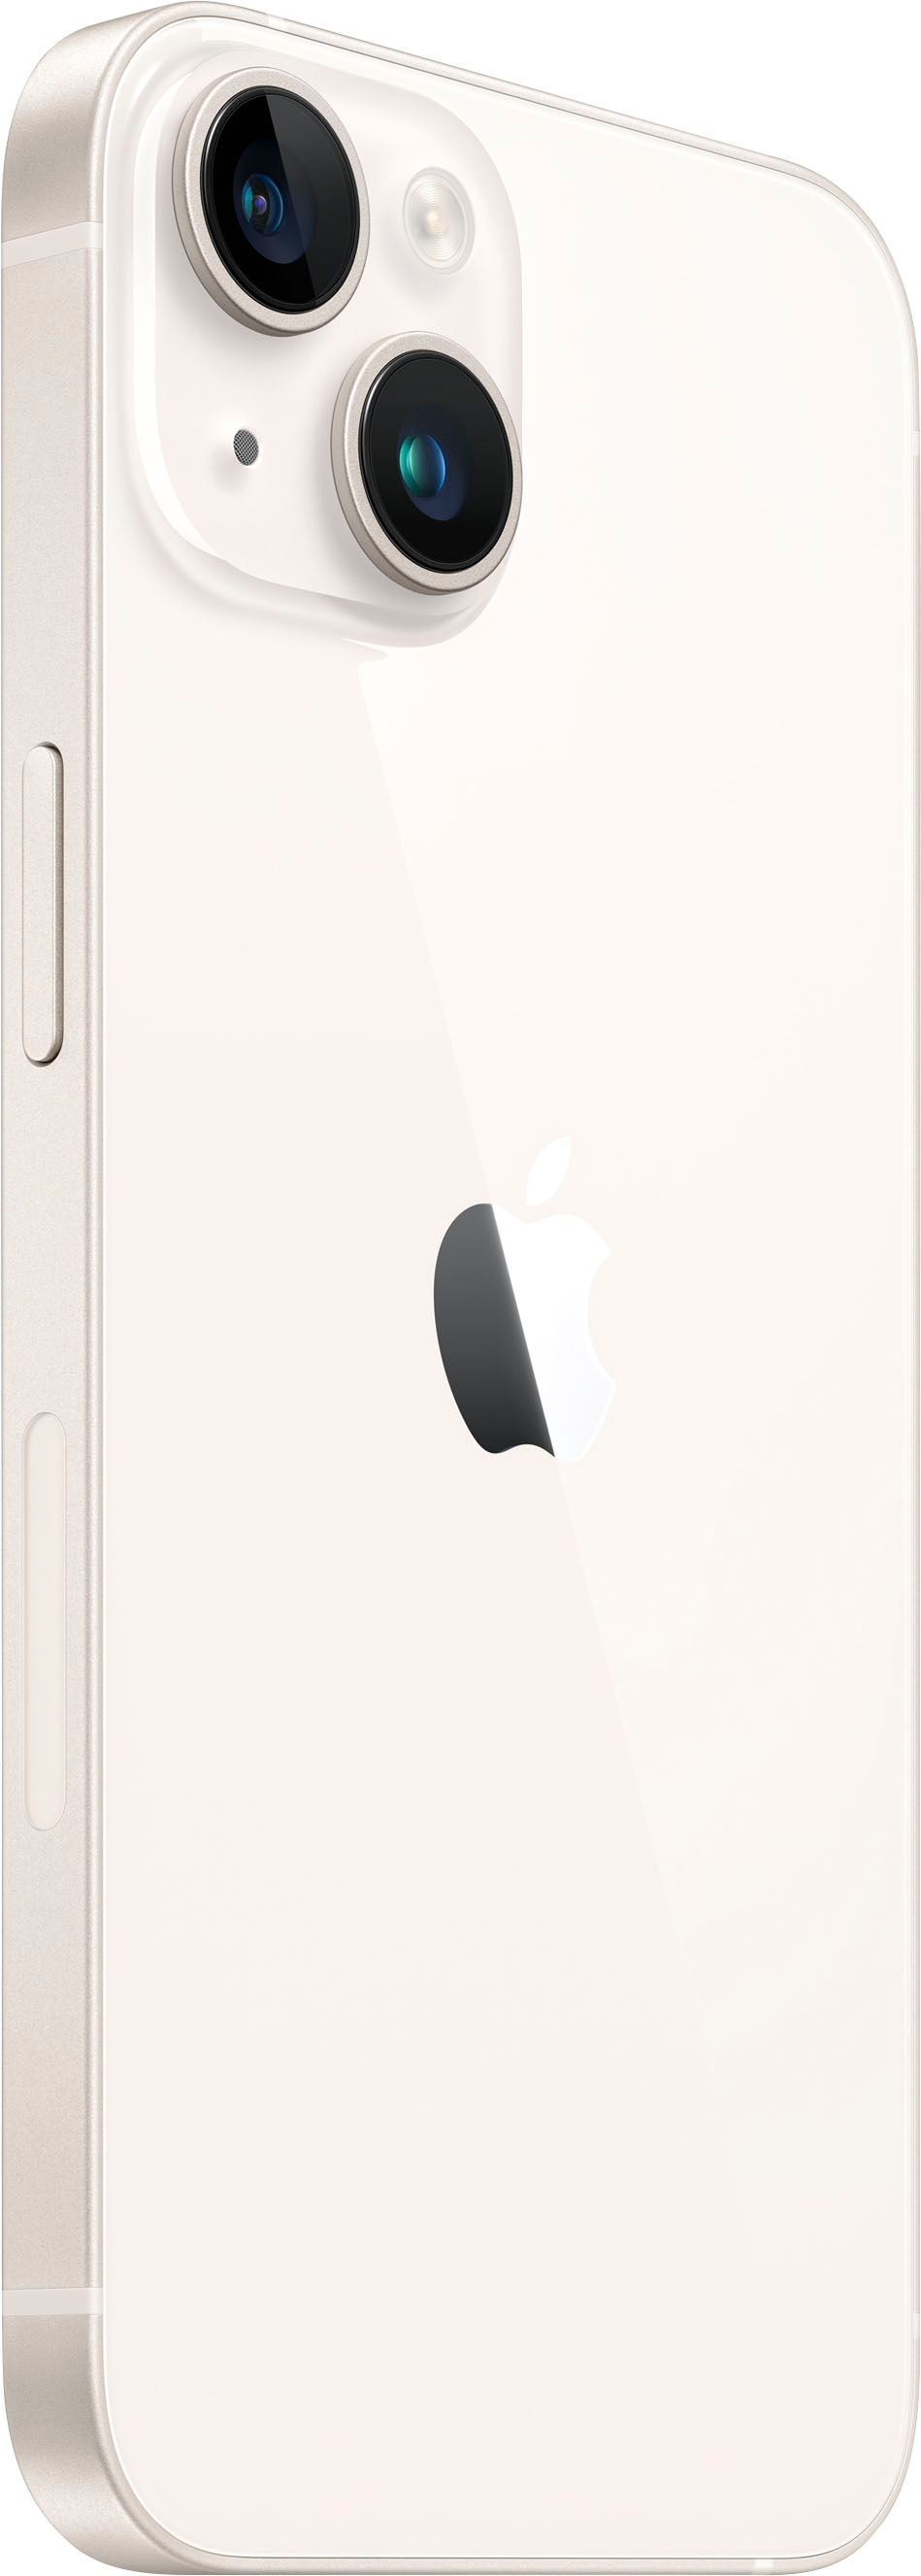 Apple iPhone 14 Pro 128GB Space Black (Verizon) MPXT3LL/A - Best Buy